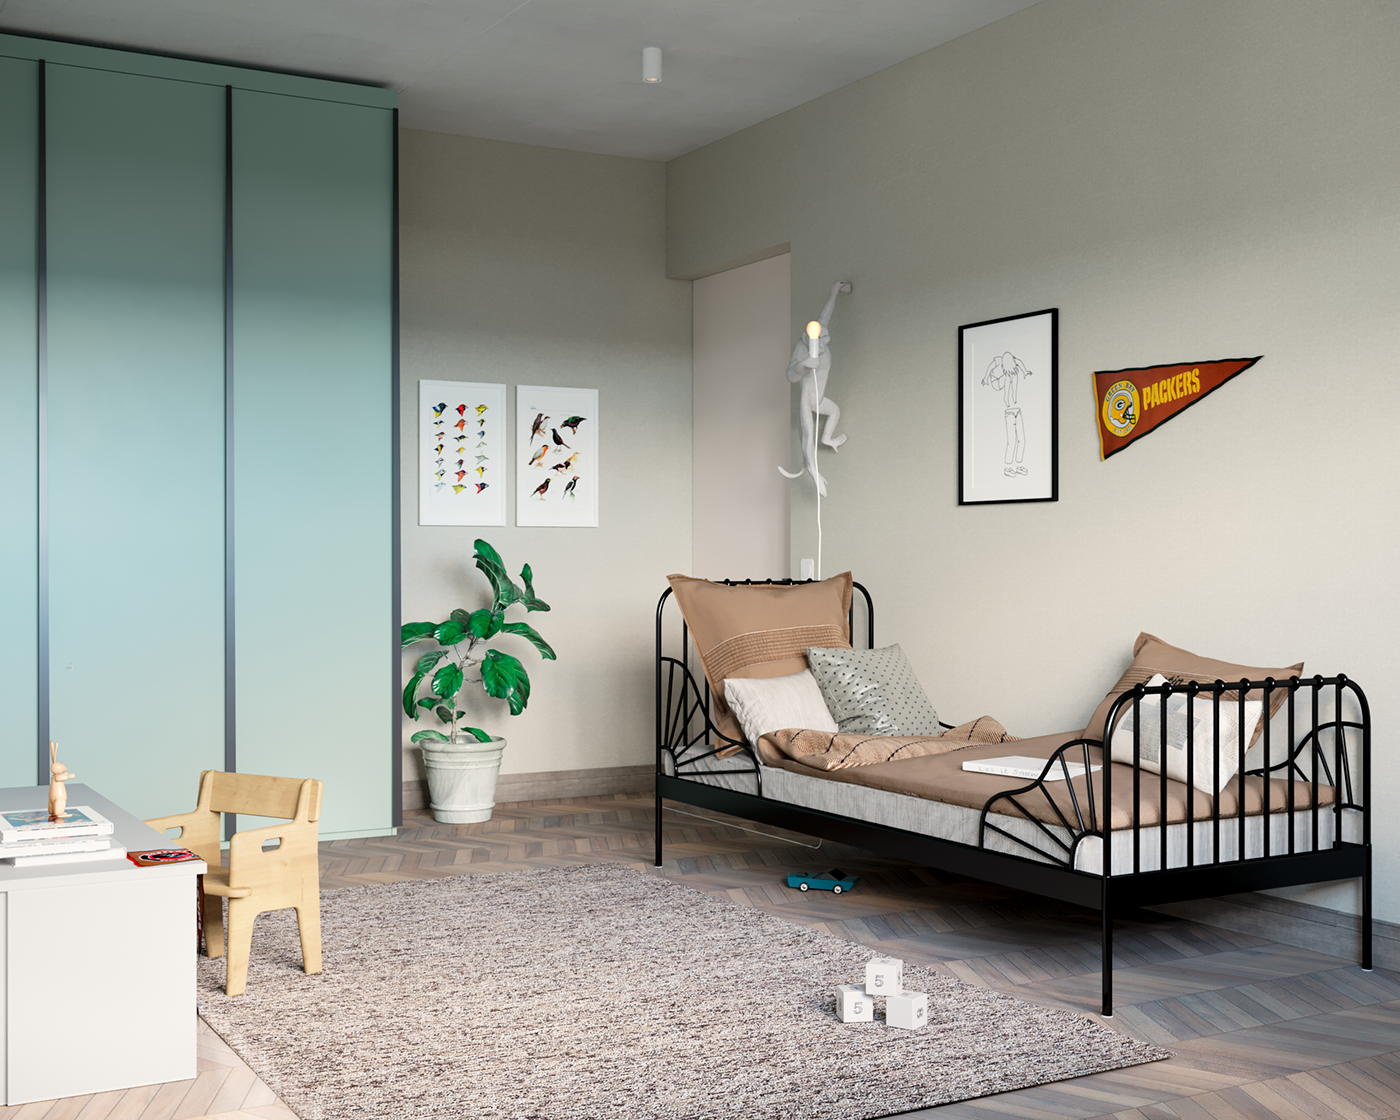 #coronarender #retro #interiordesign #ideas #art #childrenroom #livingroom